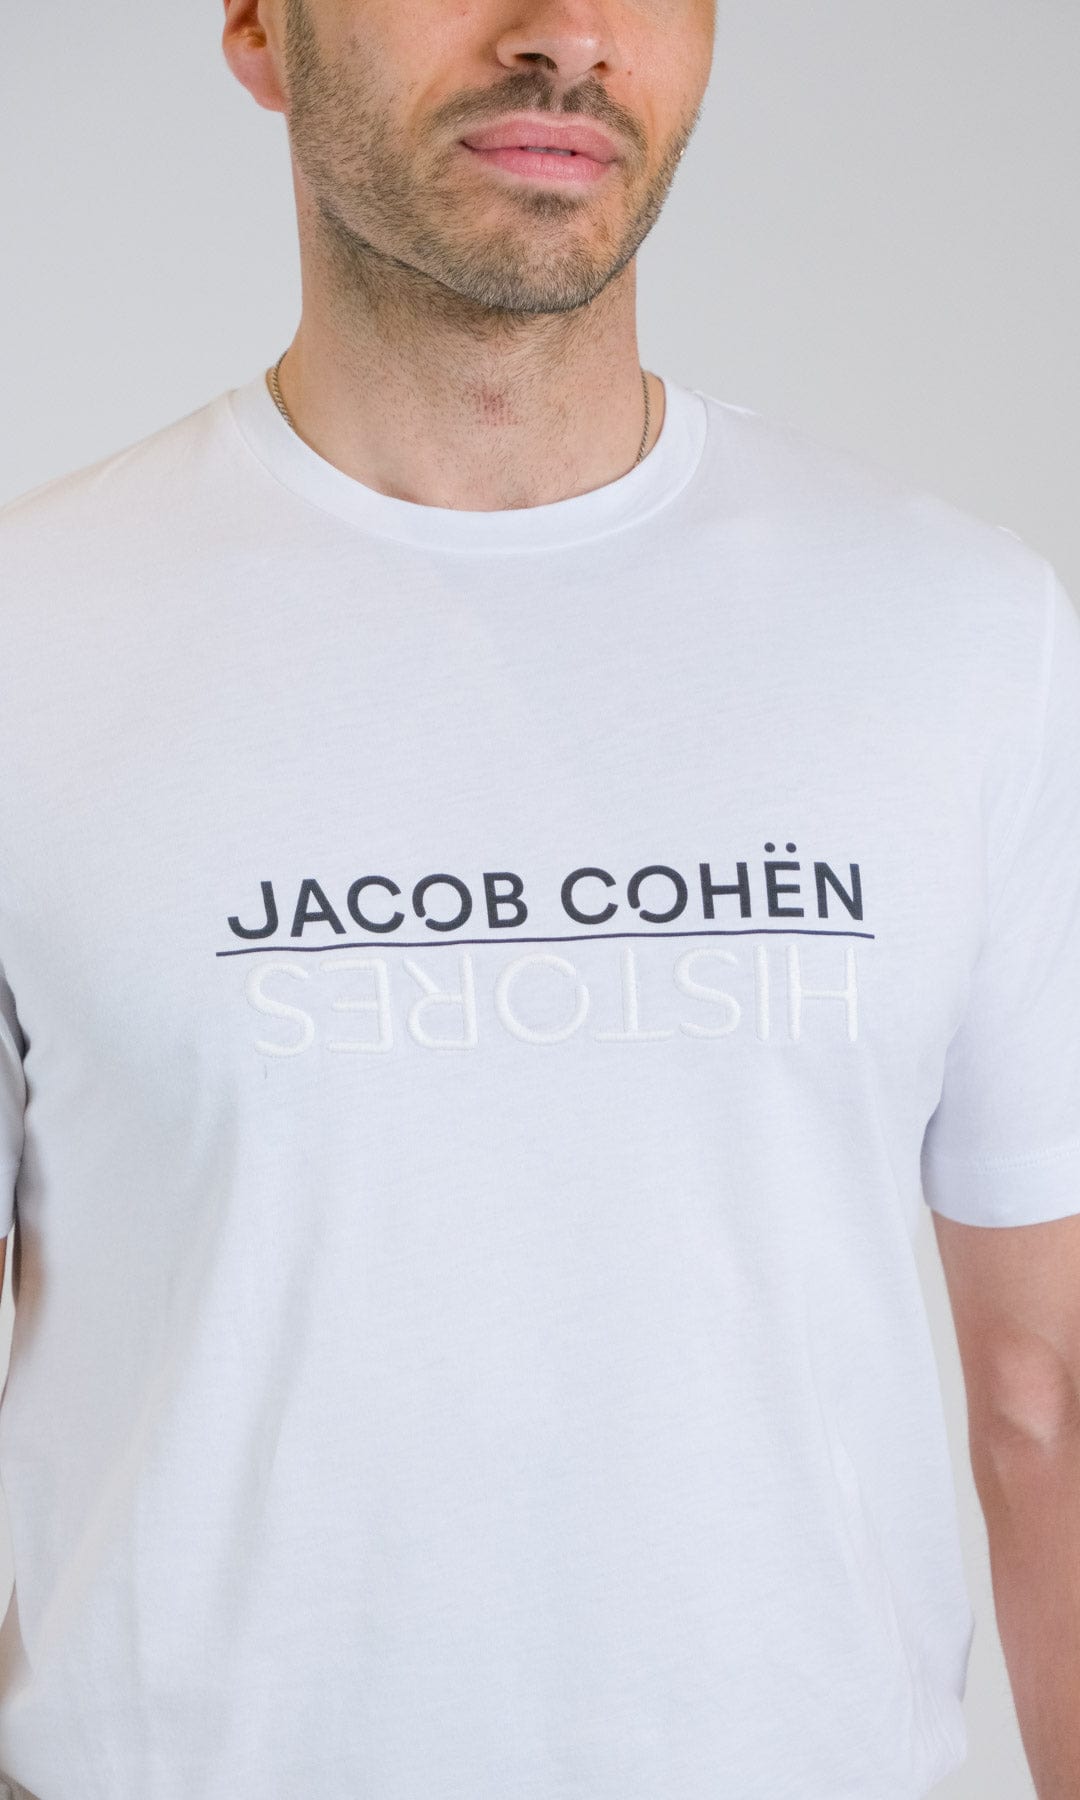 Jacob Cohen X Histores T-shirt